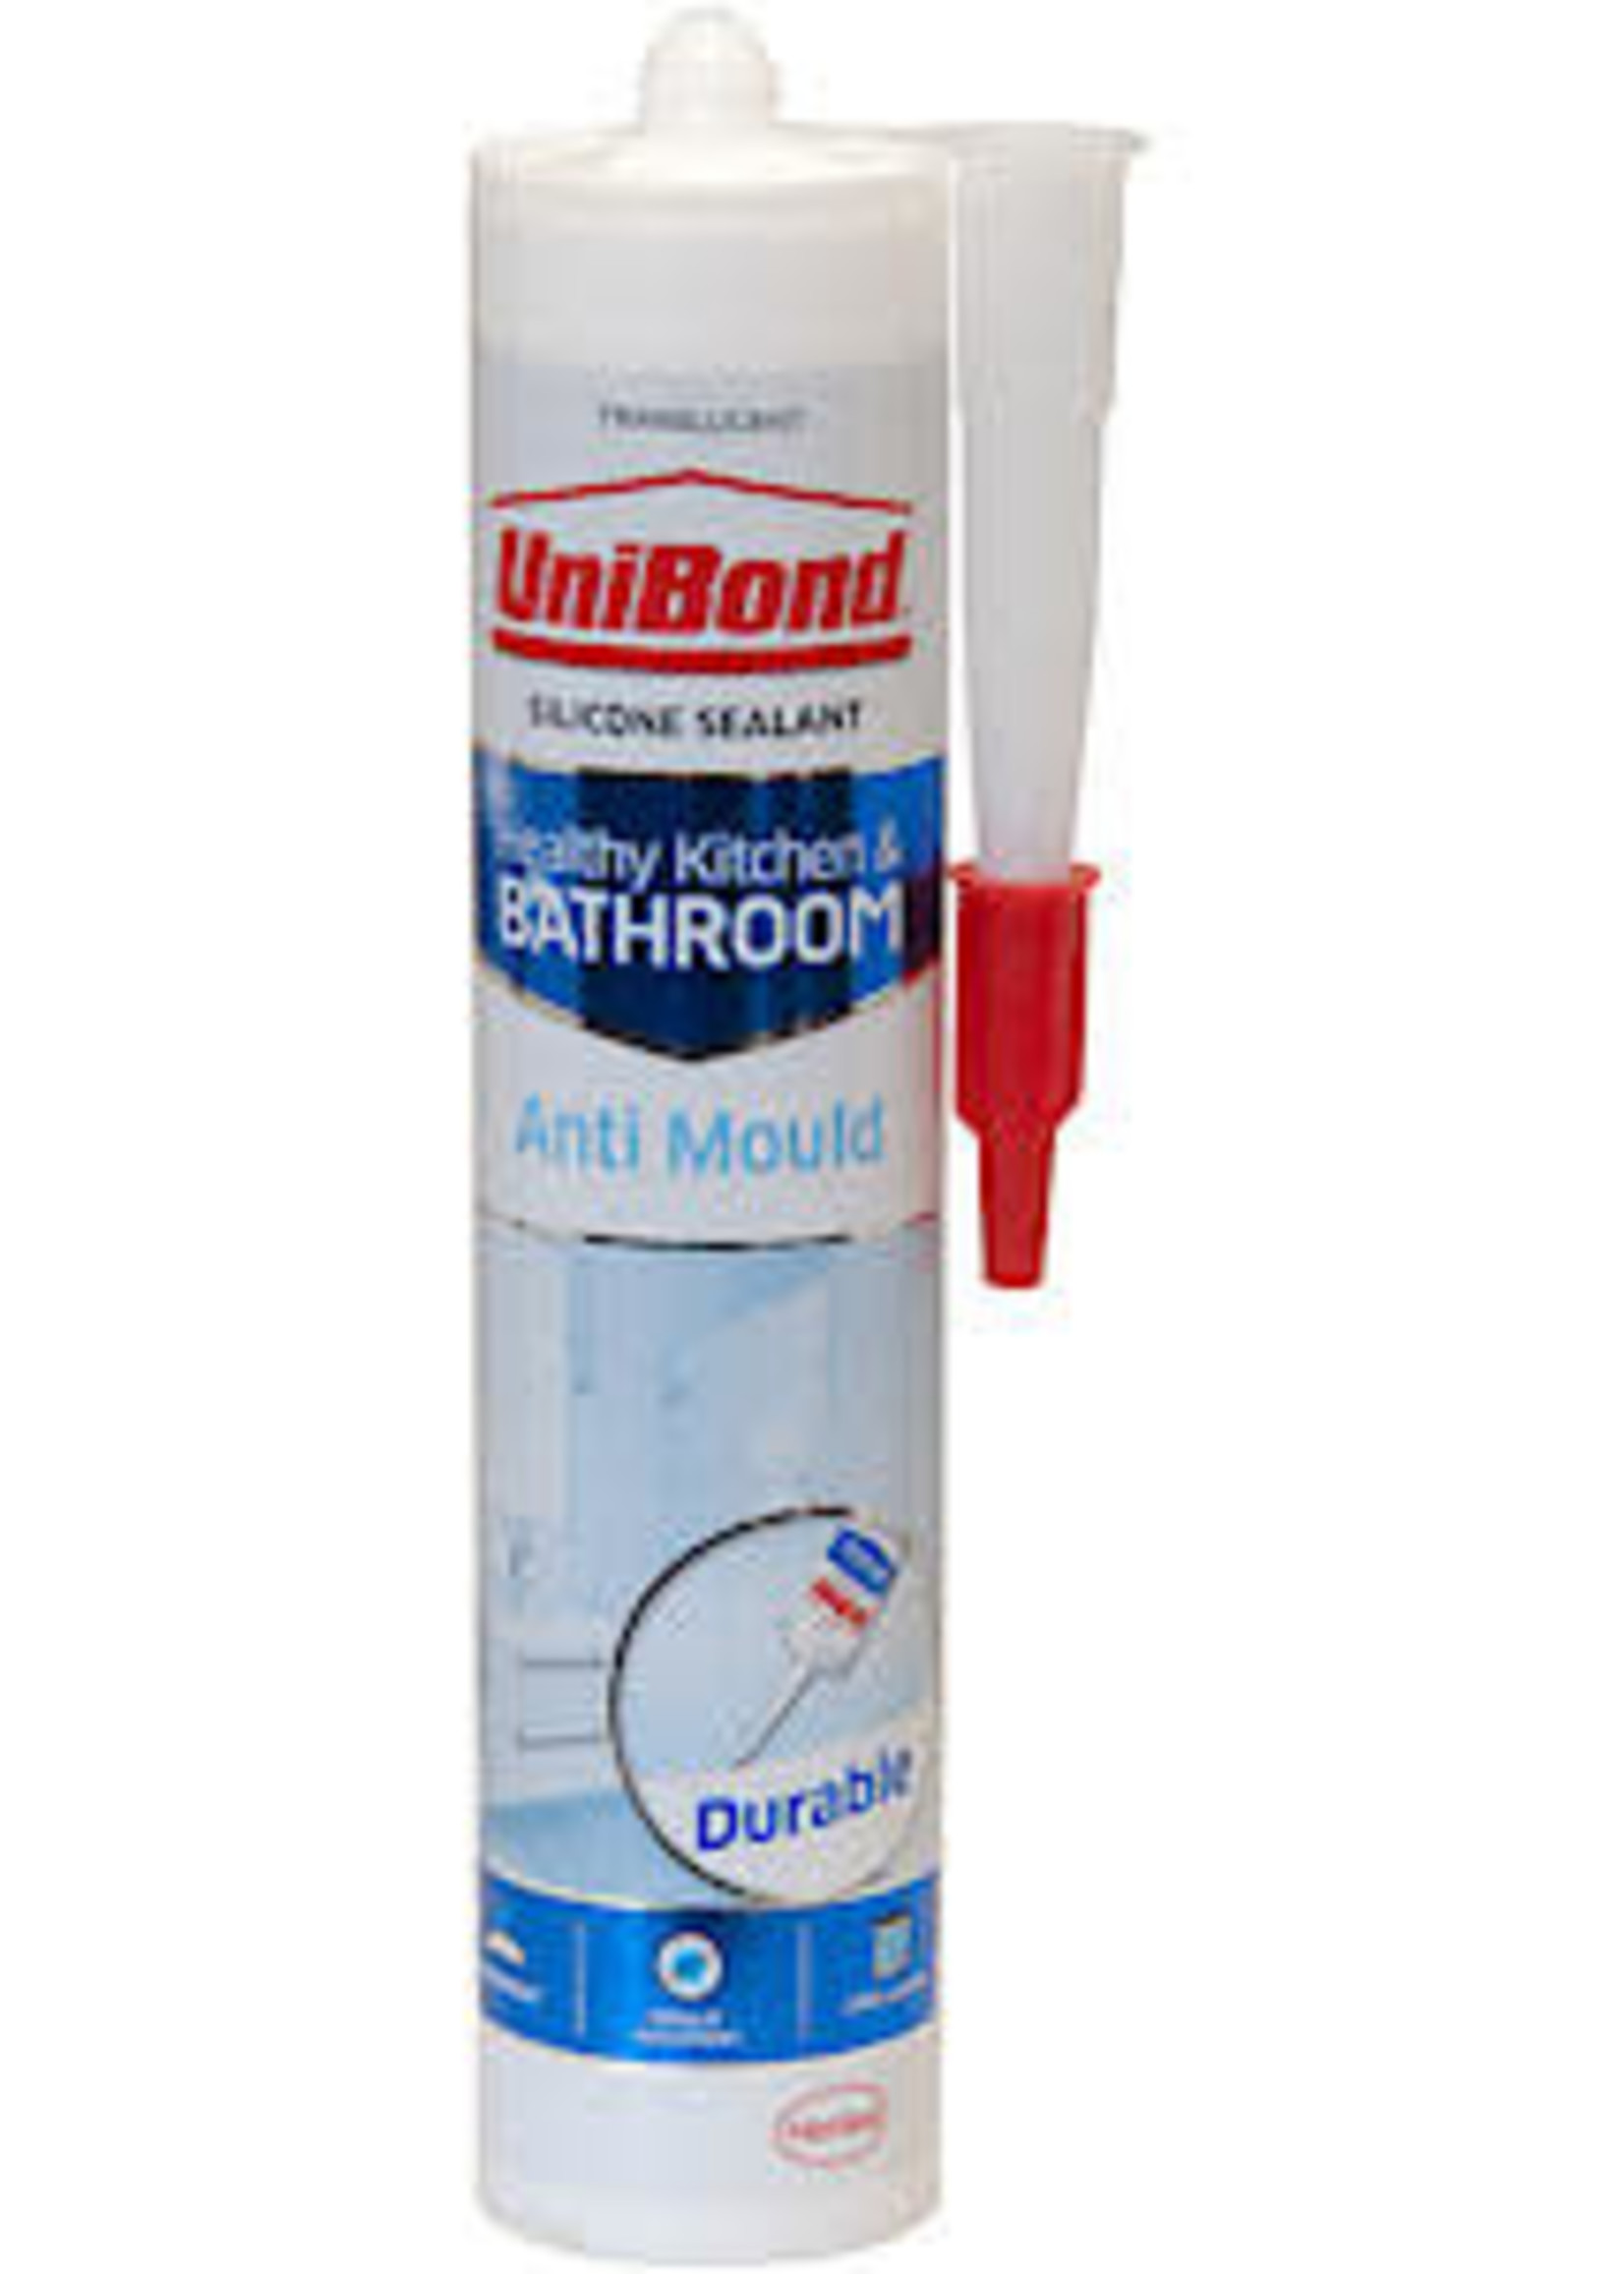 Unibond (henkel) Unibond Anti-mould Bathroom Silicone Sealant Transluscent 310ml